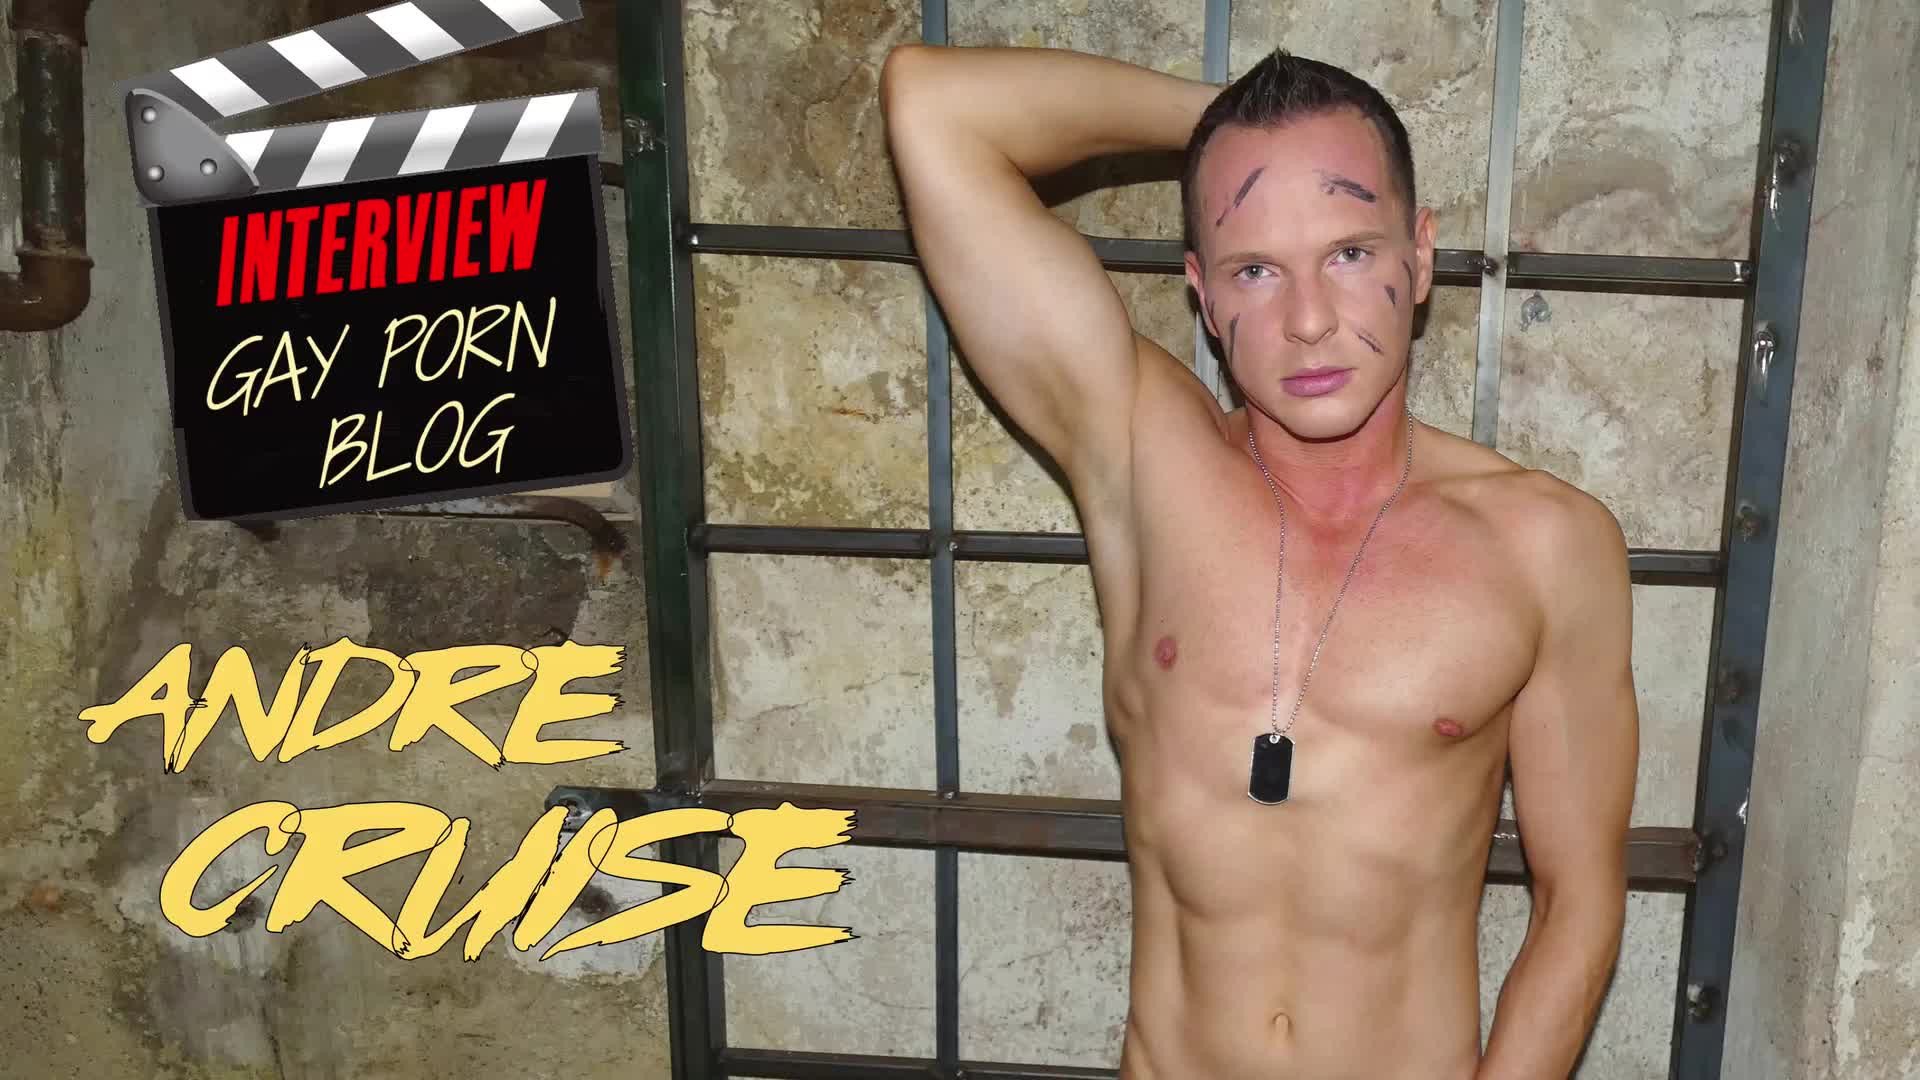 Video post by Frankfurt SexStories